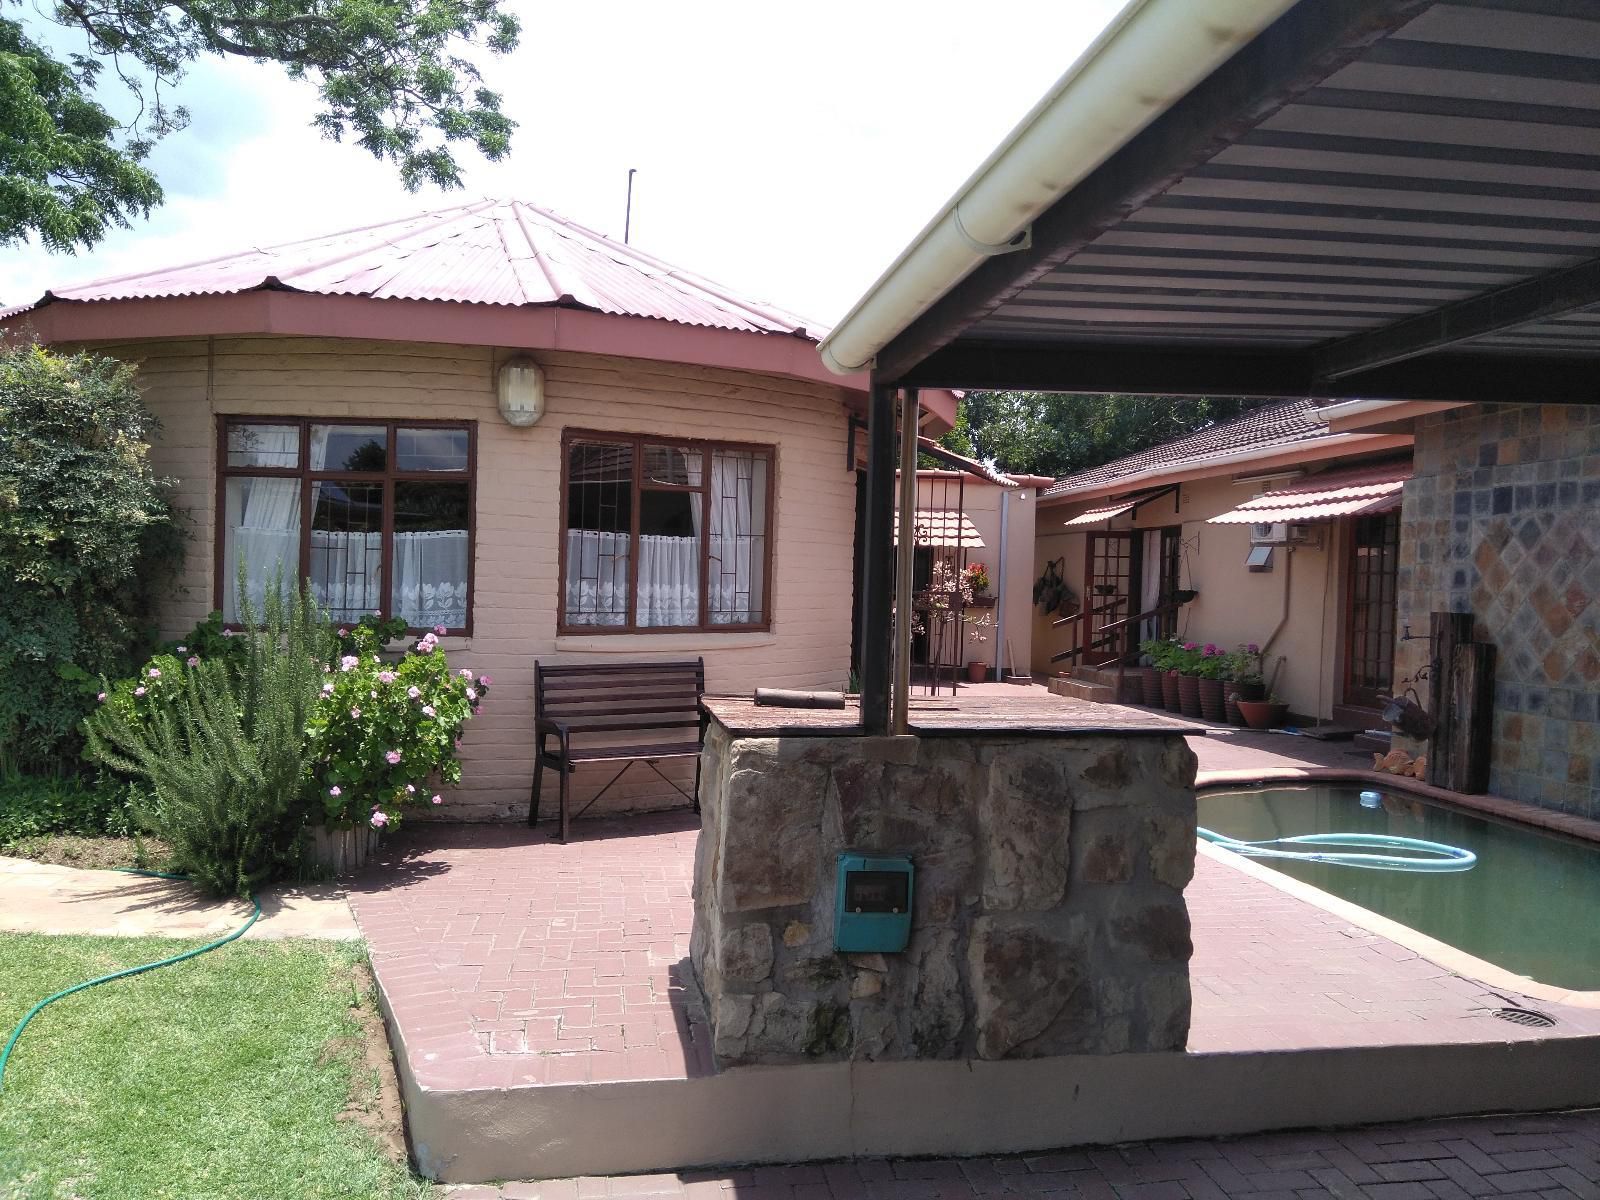 Khokha Moya Guest House Ermelo Mpumalanga South Africa House, Building, Architecture, Swimming Pool